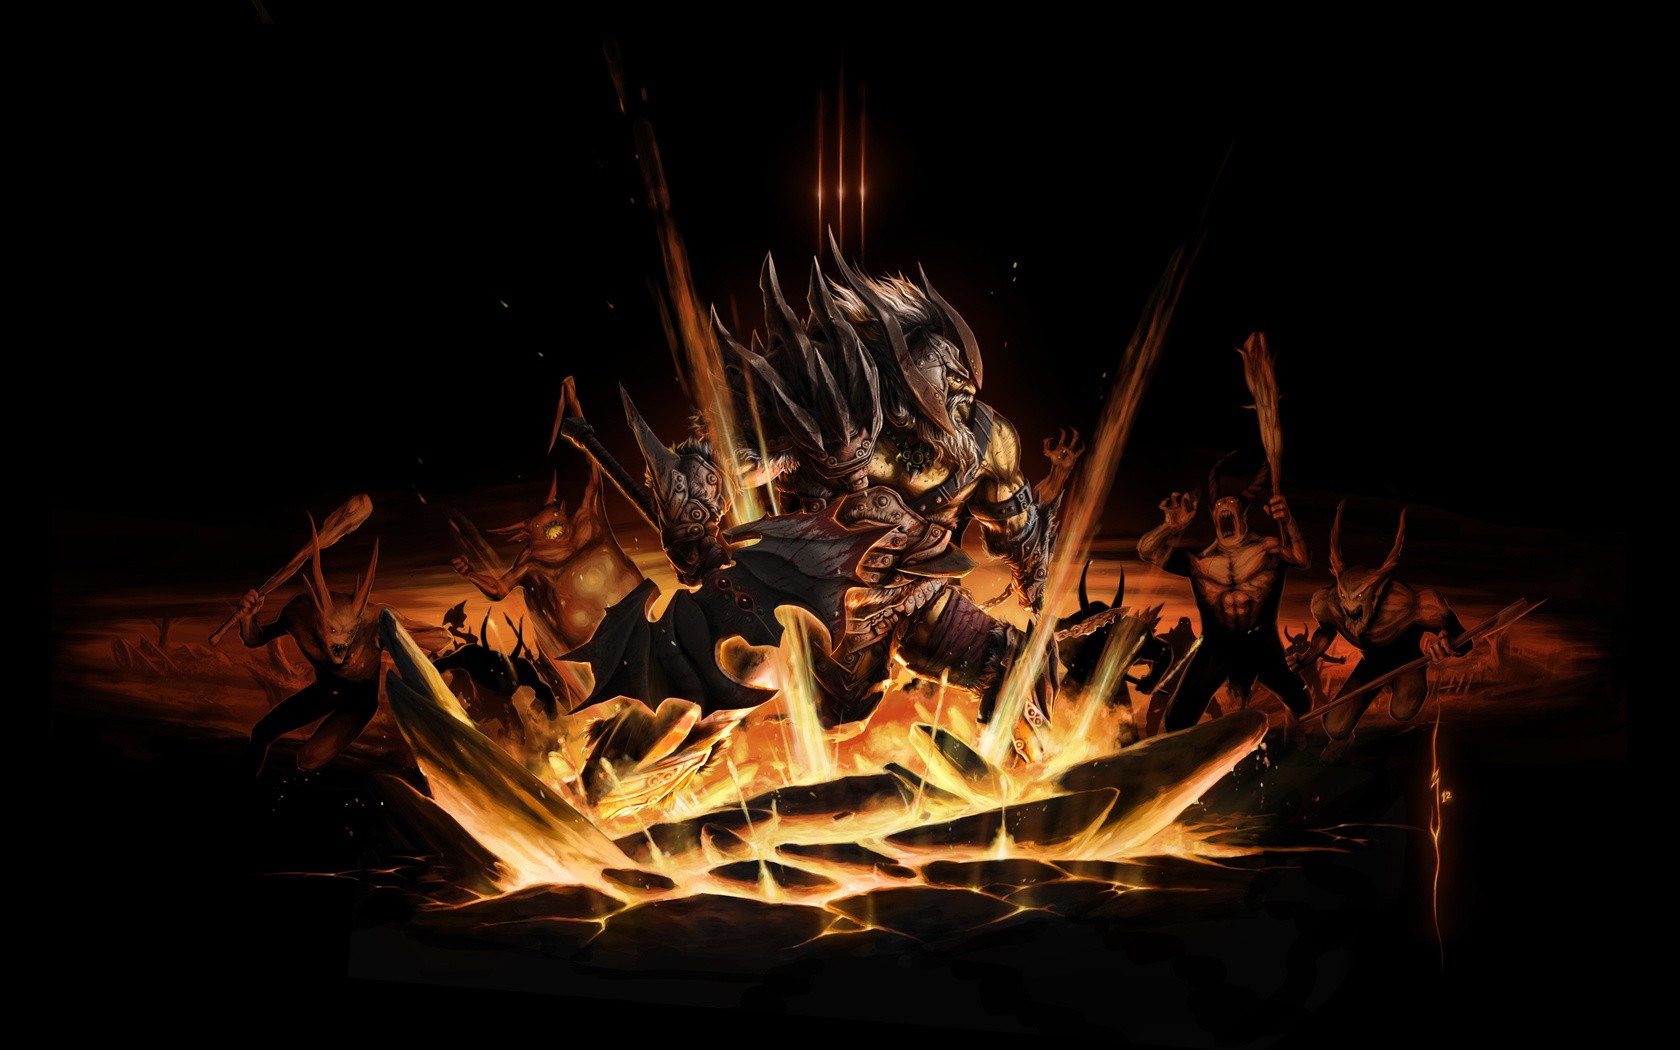 General 1680x1050 Diablo Diablo III fantasy art warrior video games video game art PC gaming simple background black background